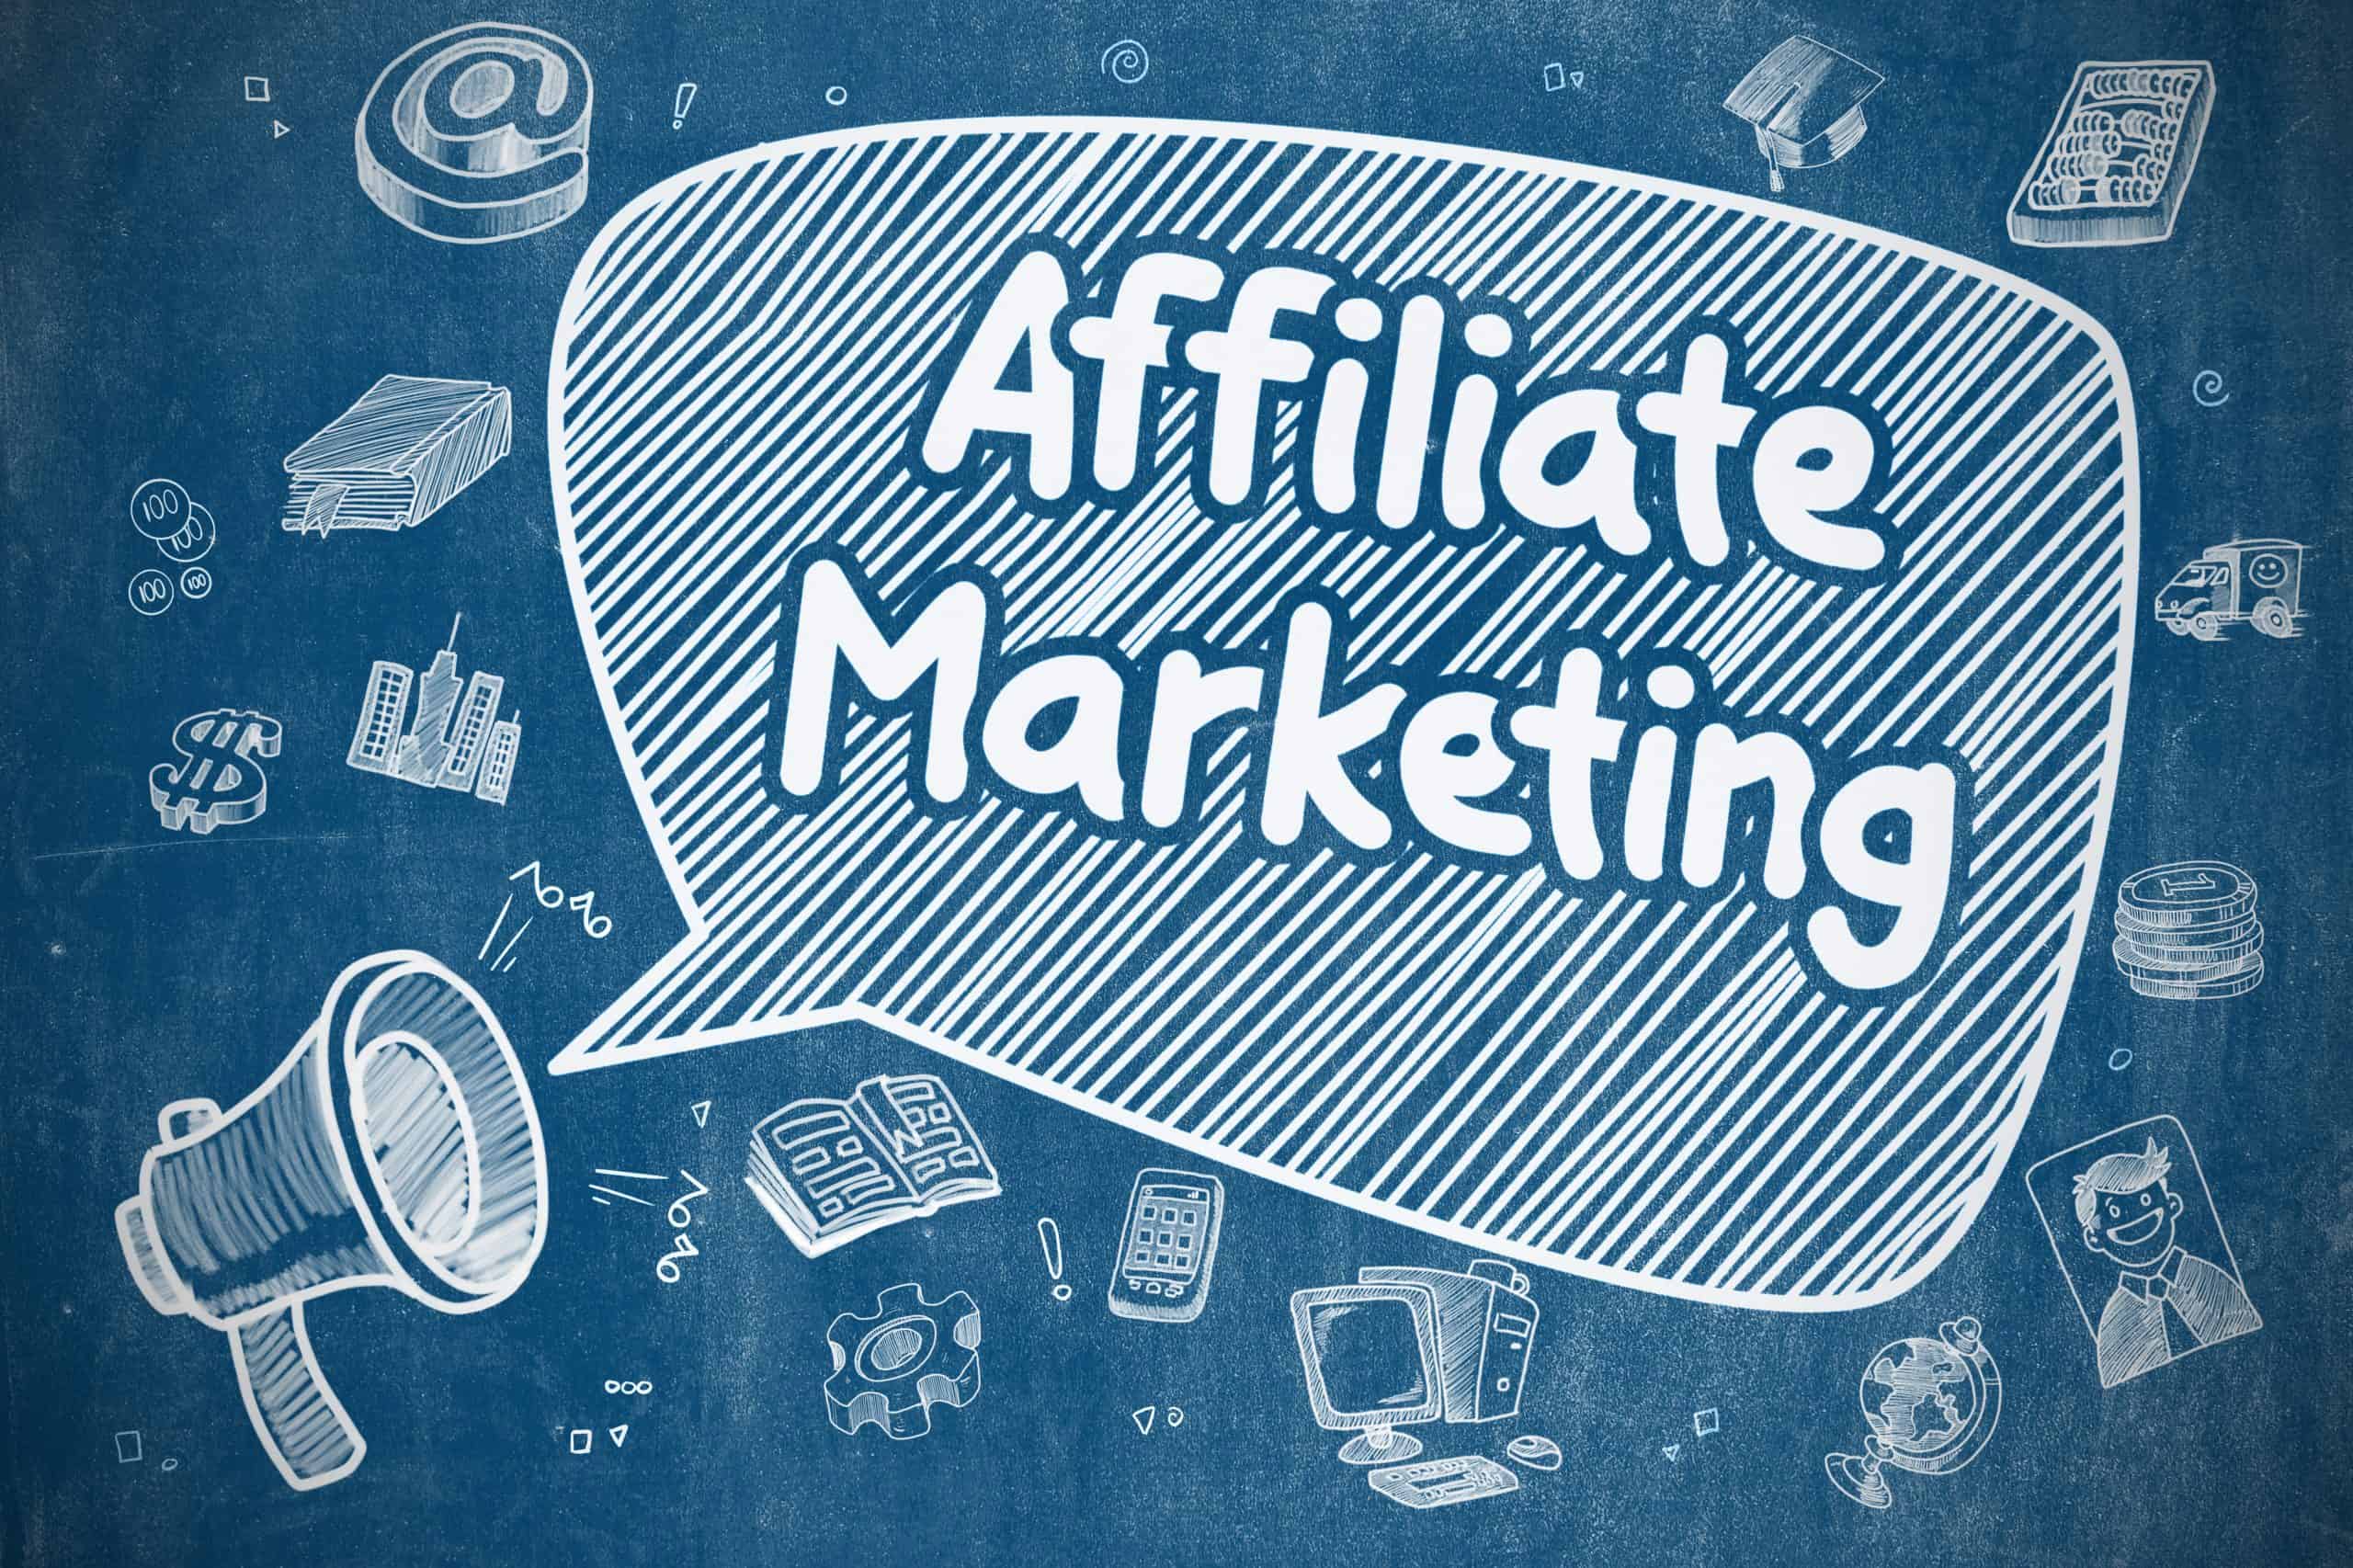 cách làm affiliate marketing